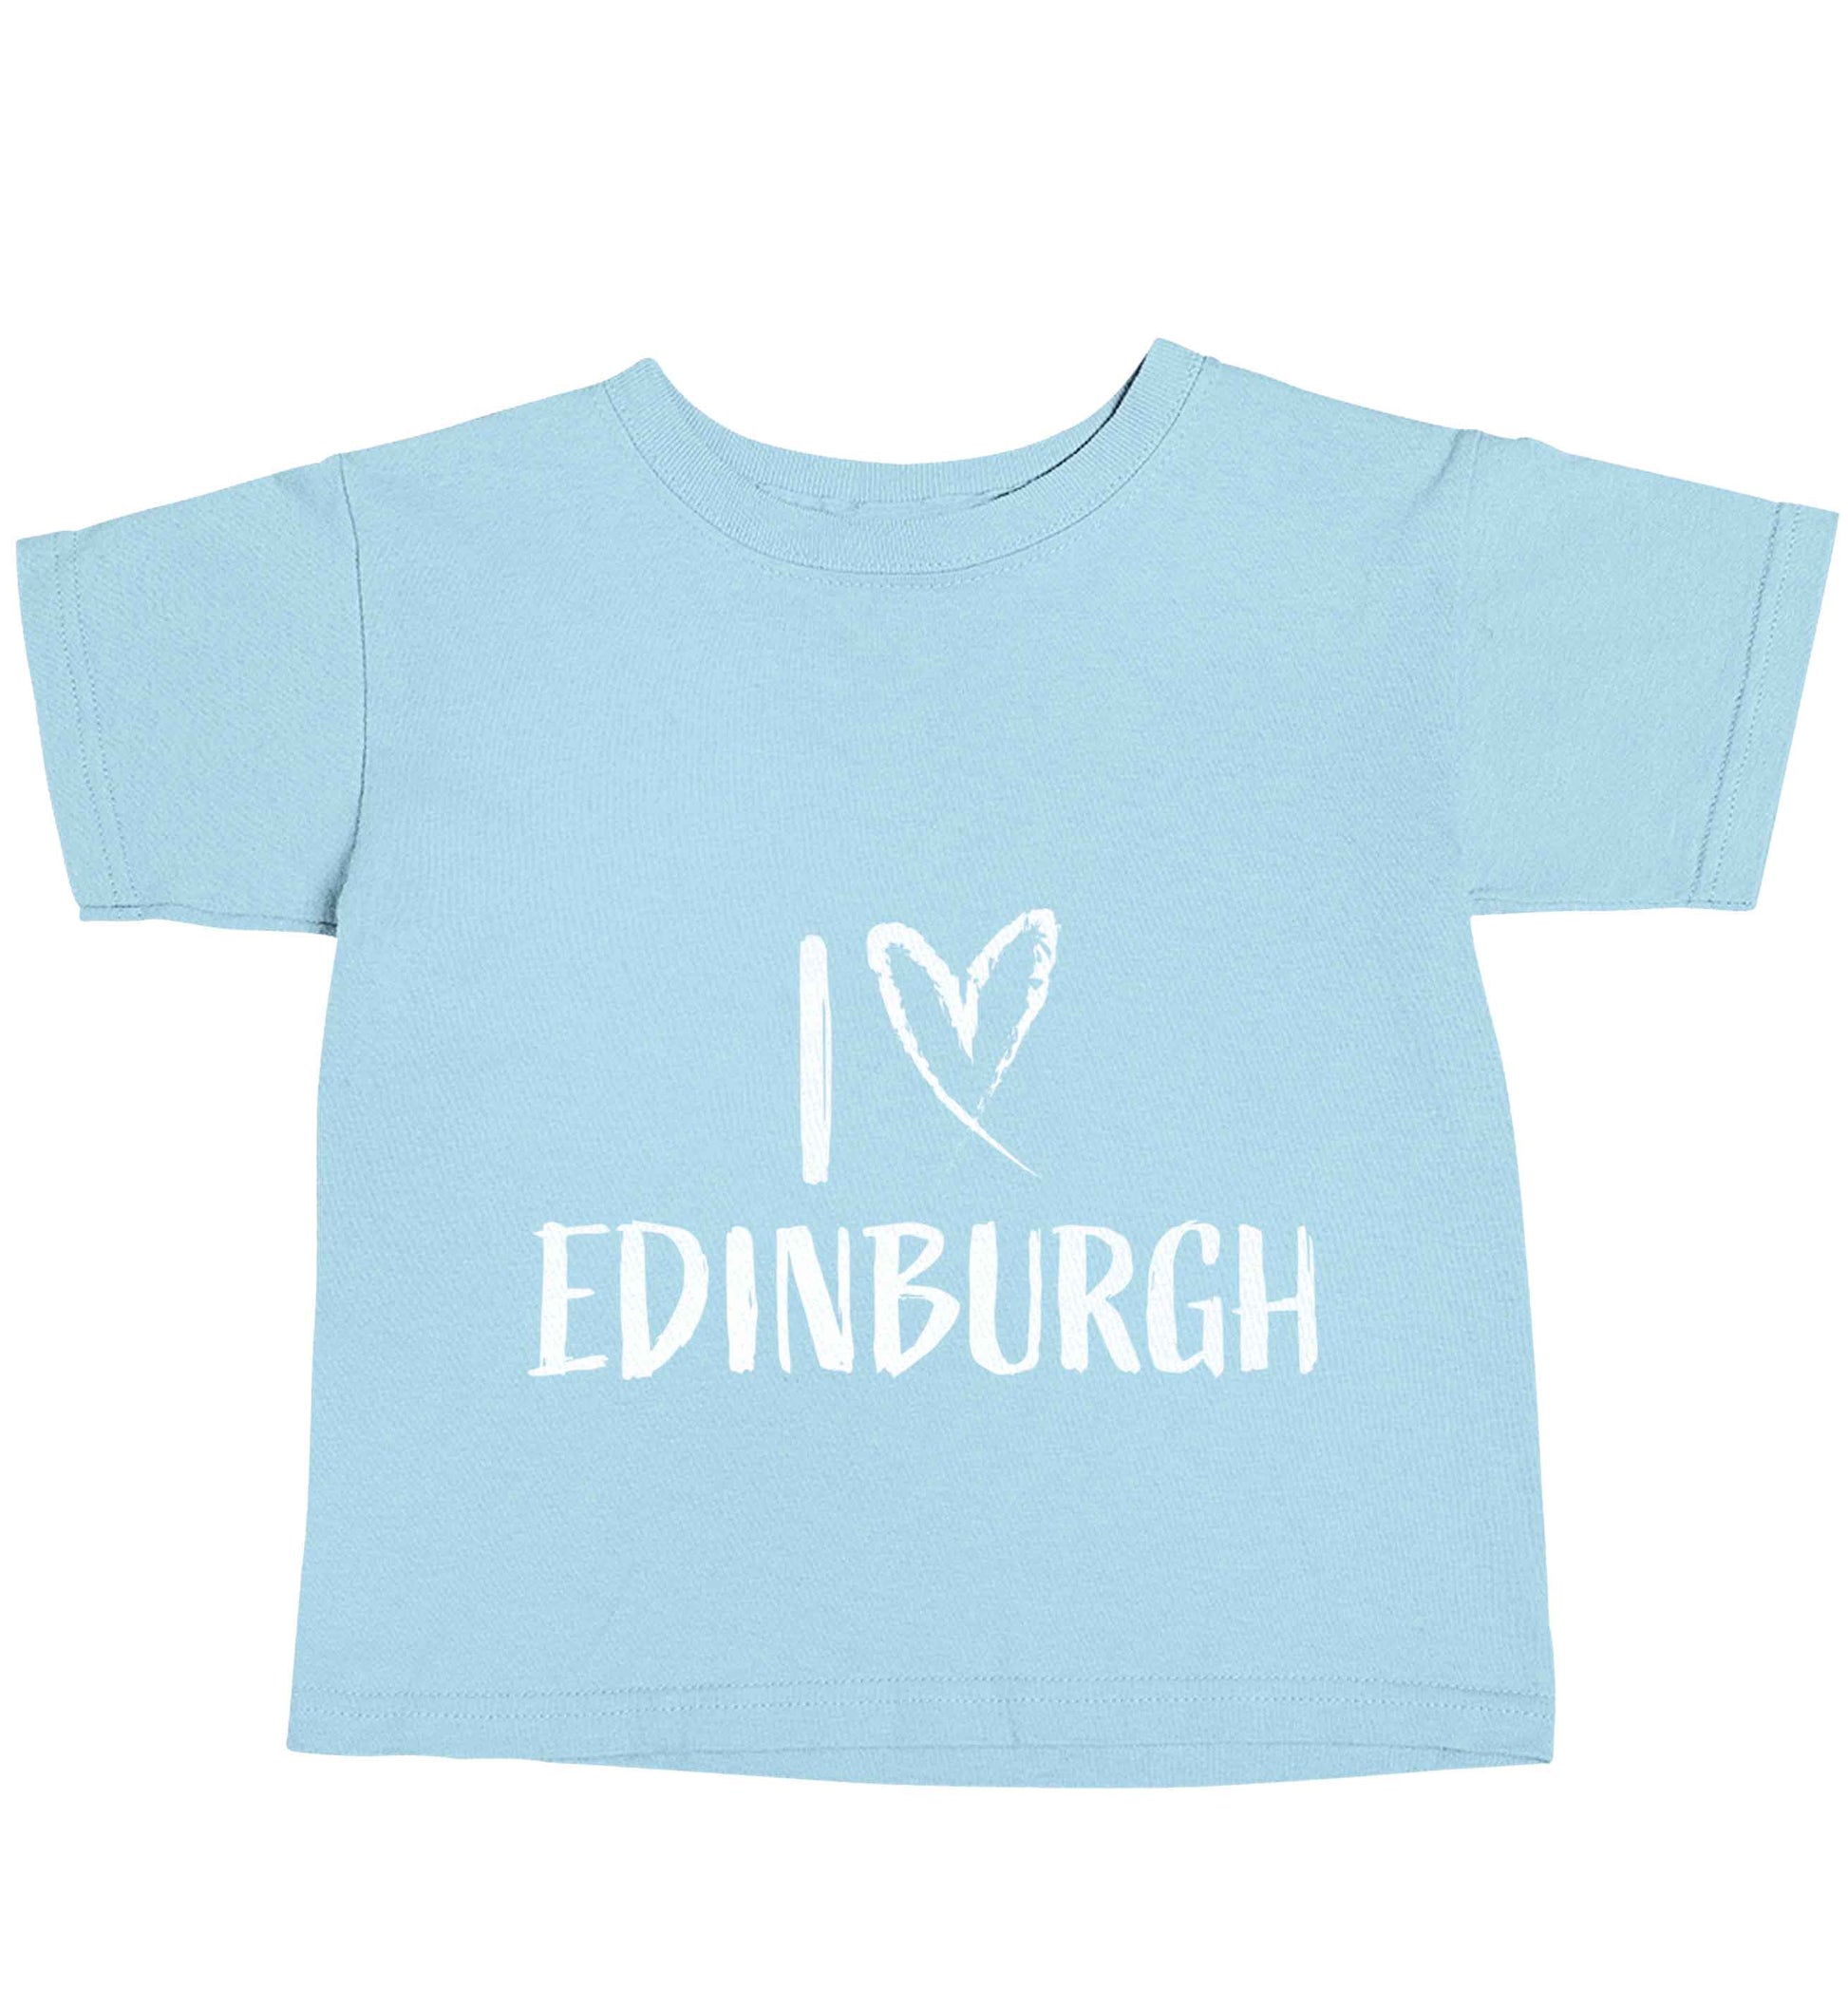 I love Edinburgh light blue baby toddler Tshirt 2 Years